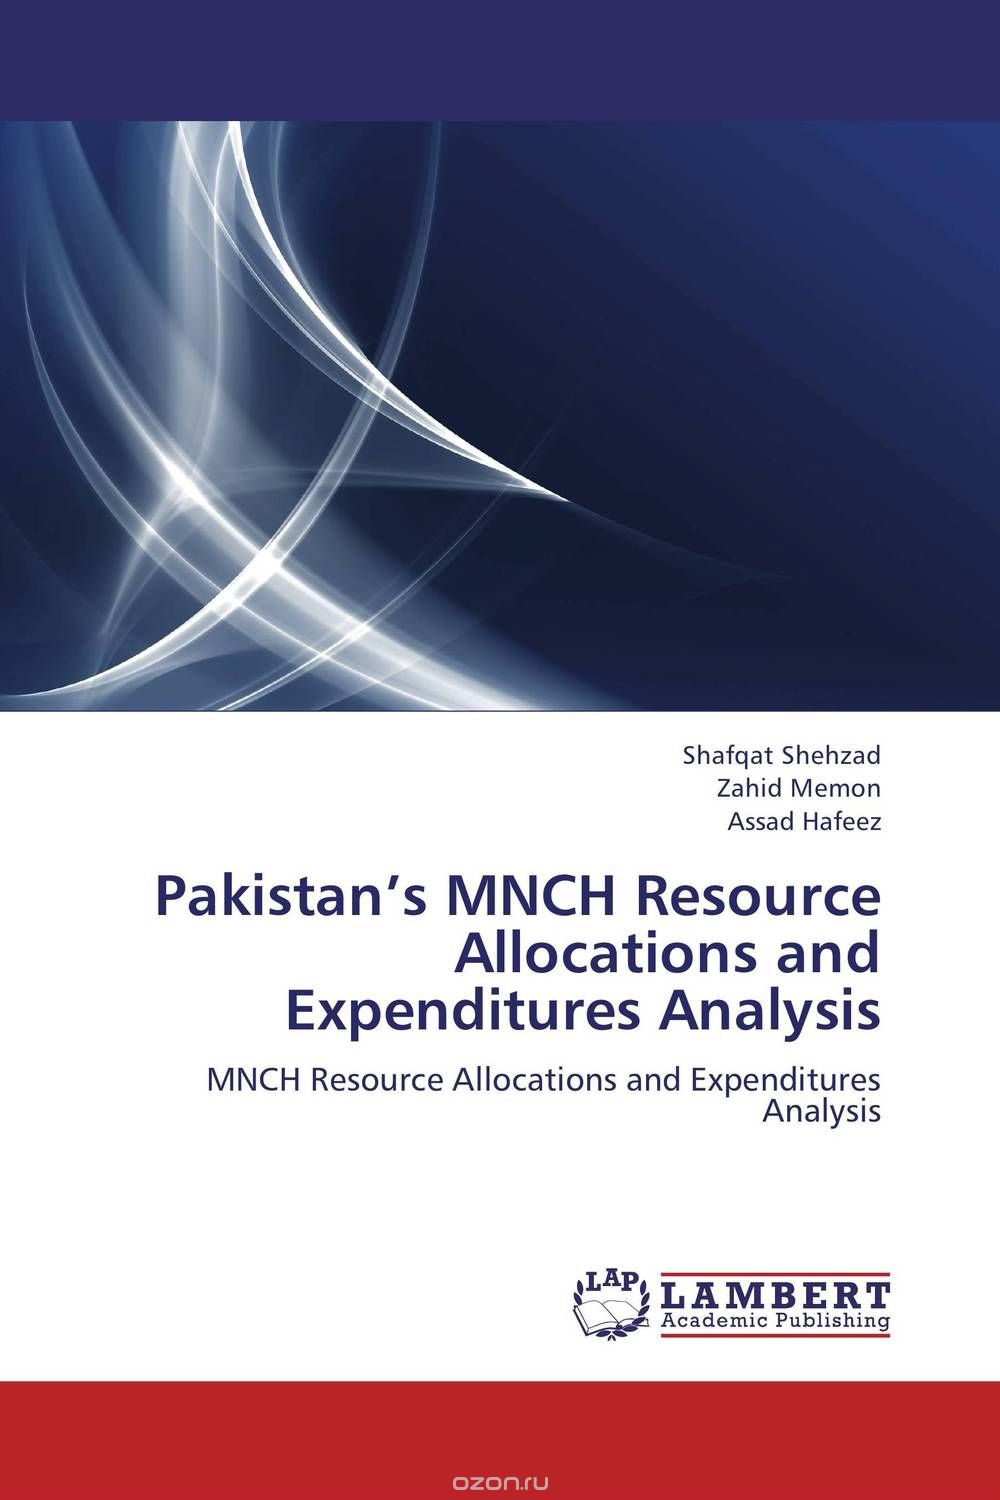 Скачать книгу "Pakistan’s MNCH Resource Allocations and Expenditures Analysis"